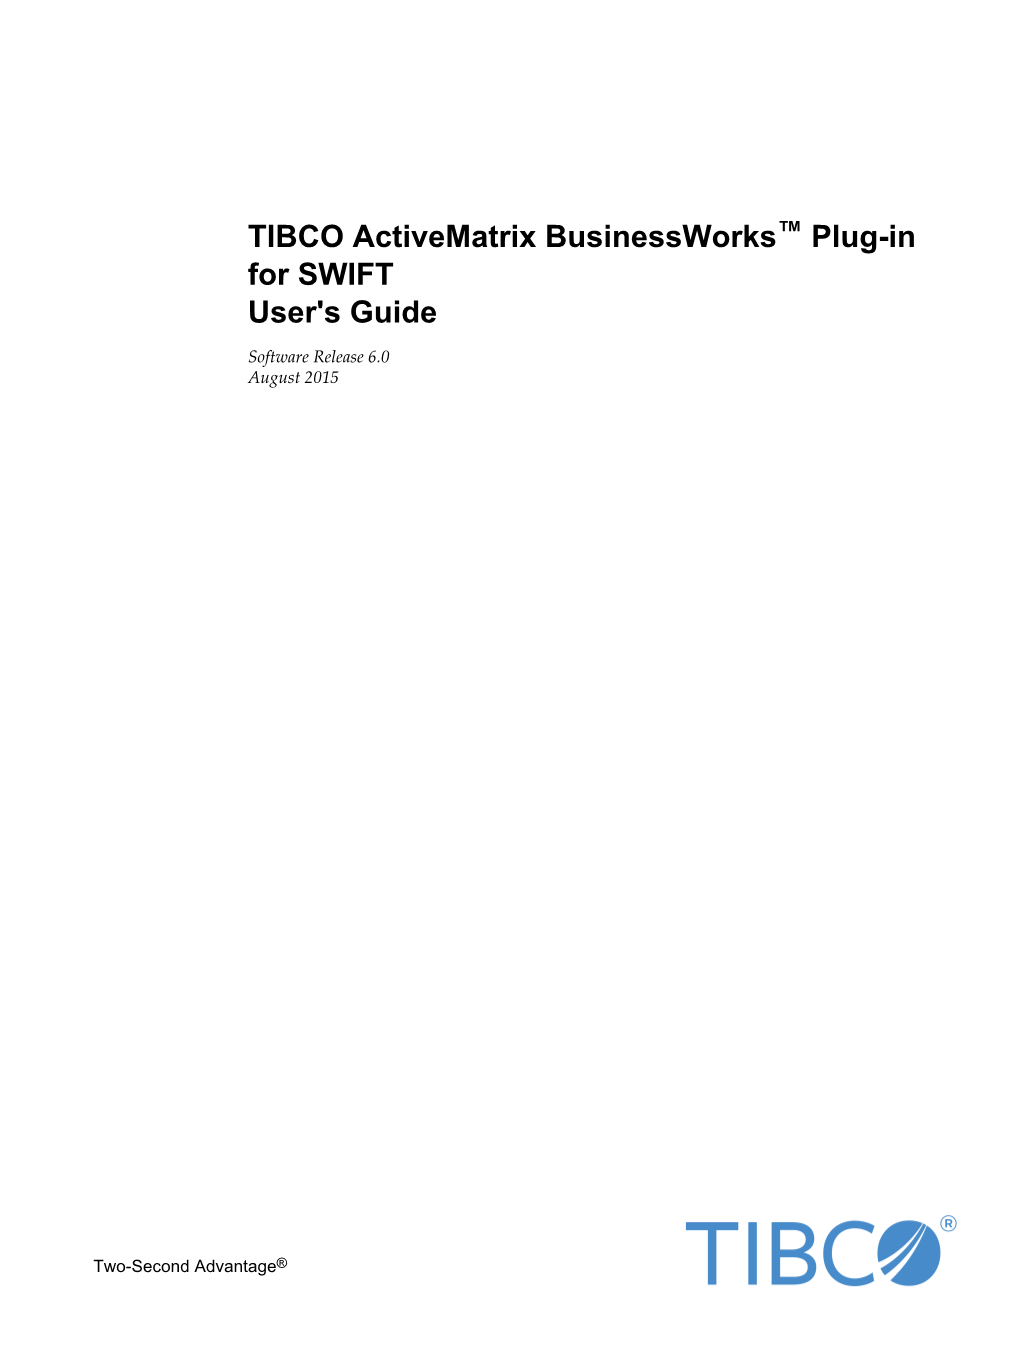 TIBCO Activematrix Businessworks™ Plug-In for SWIFT User's Guide